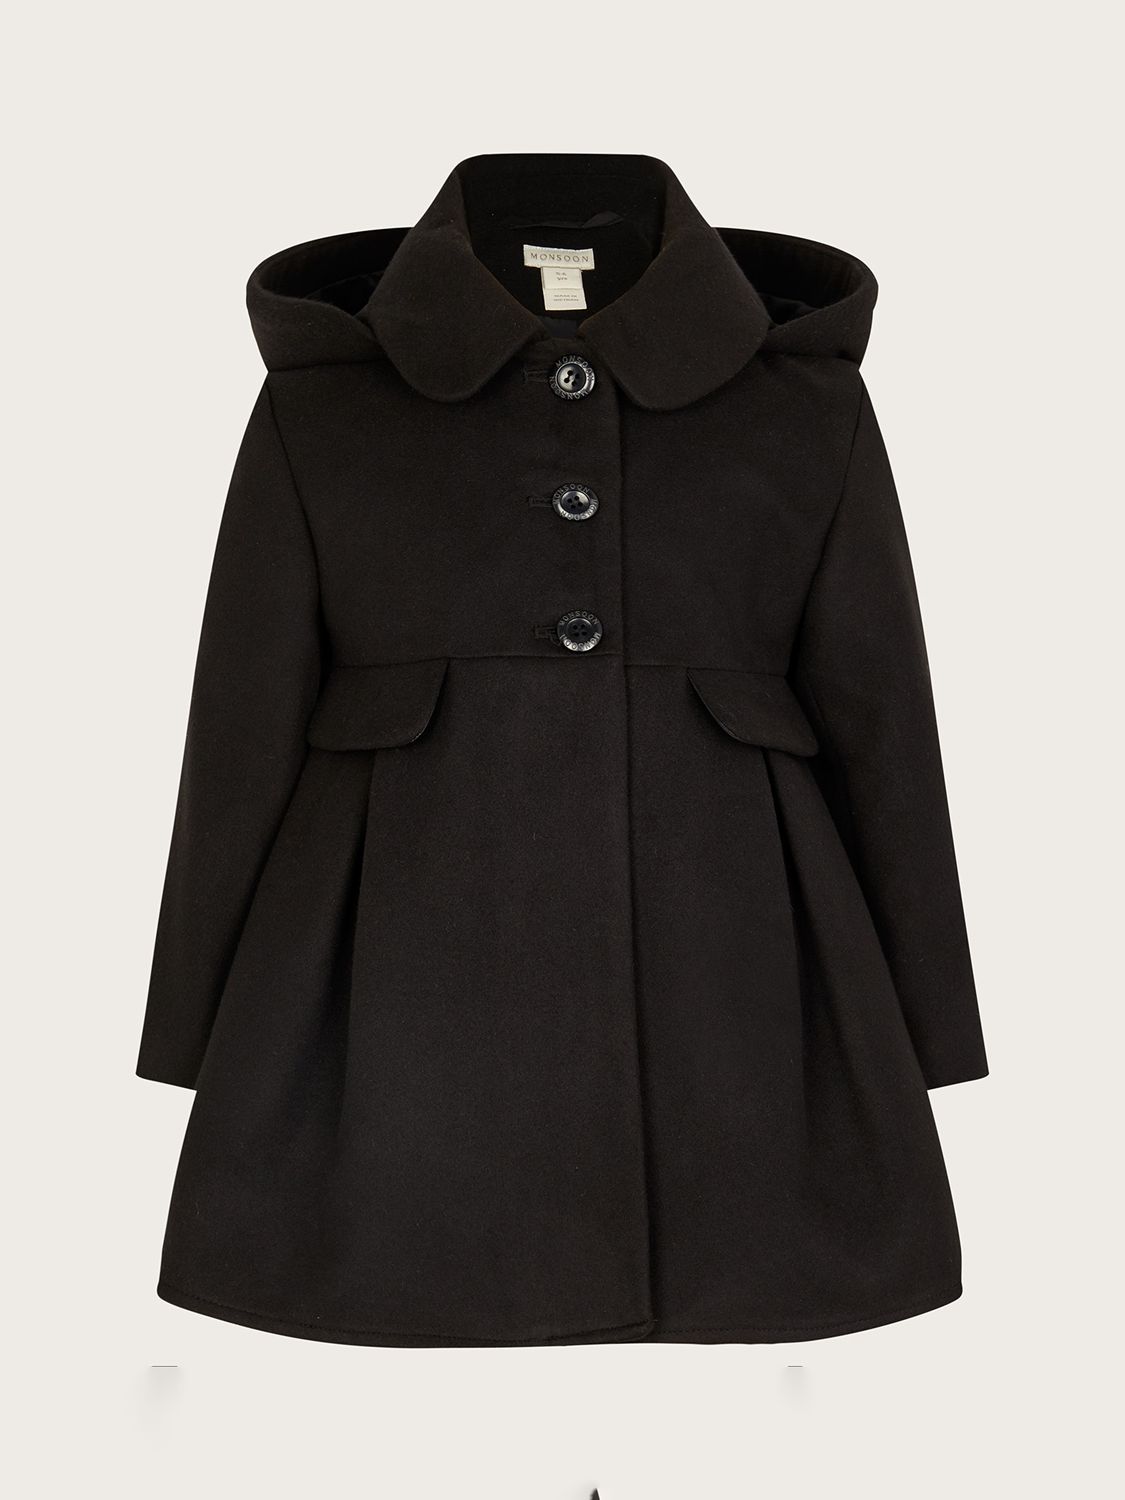 Monsoon Kids' Collar Hooded Coat, Black at John Lewis & Partners